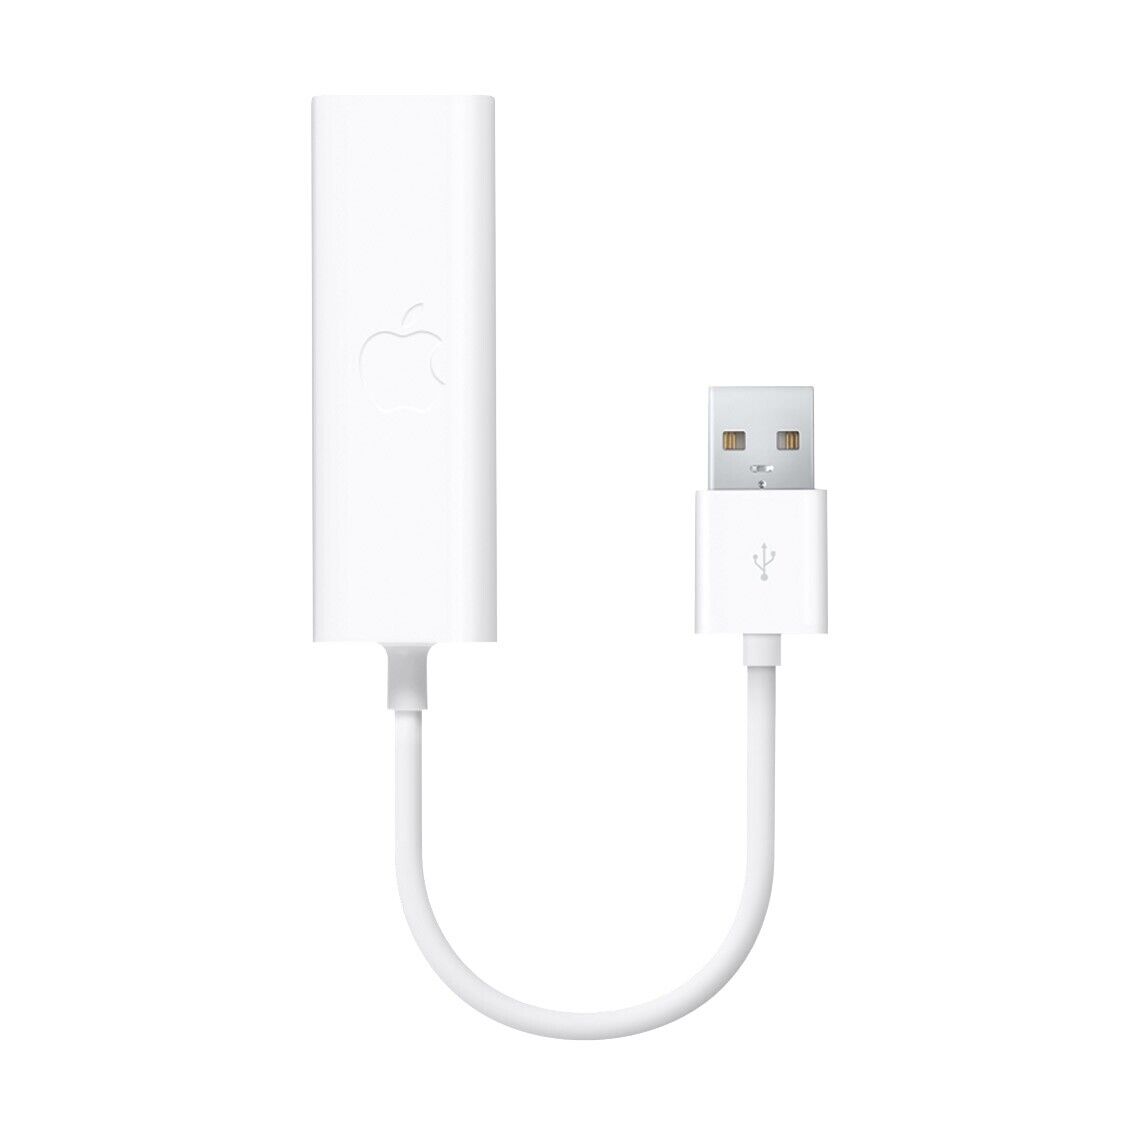 Apple USB 2.0 Ethernet Adapter - White (MC704LL/A)